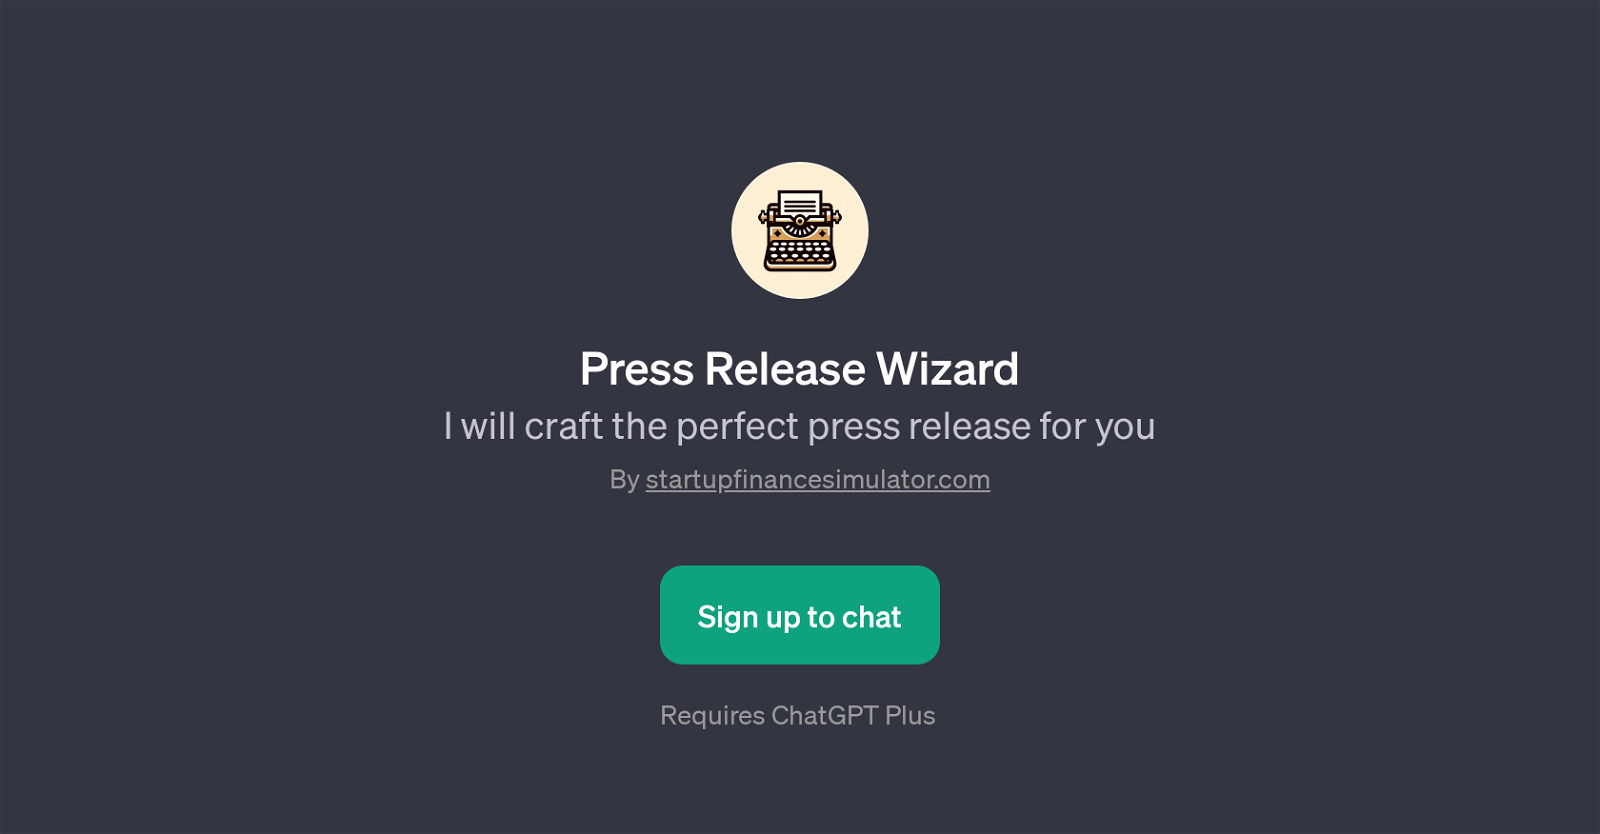 Press Release Wizard website